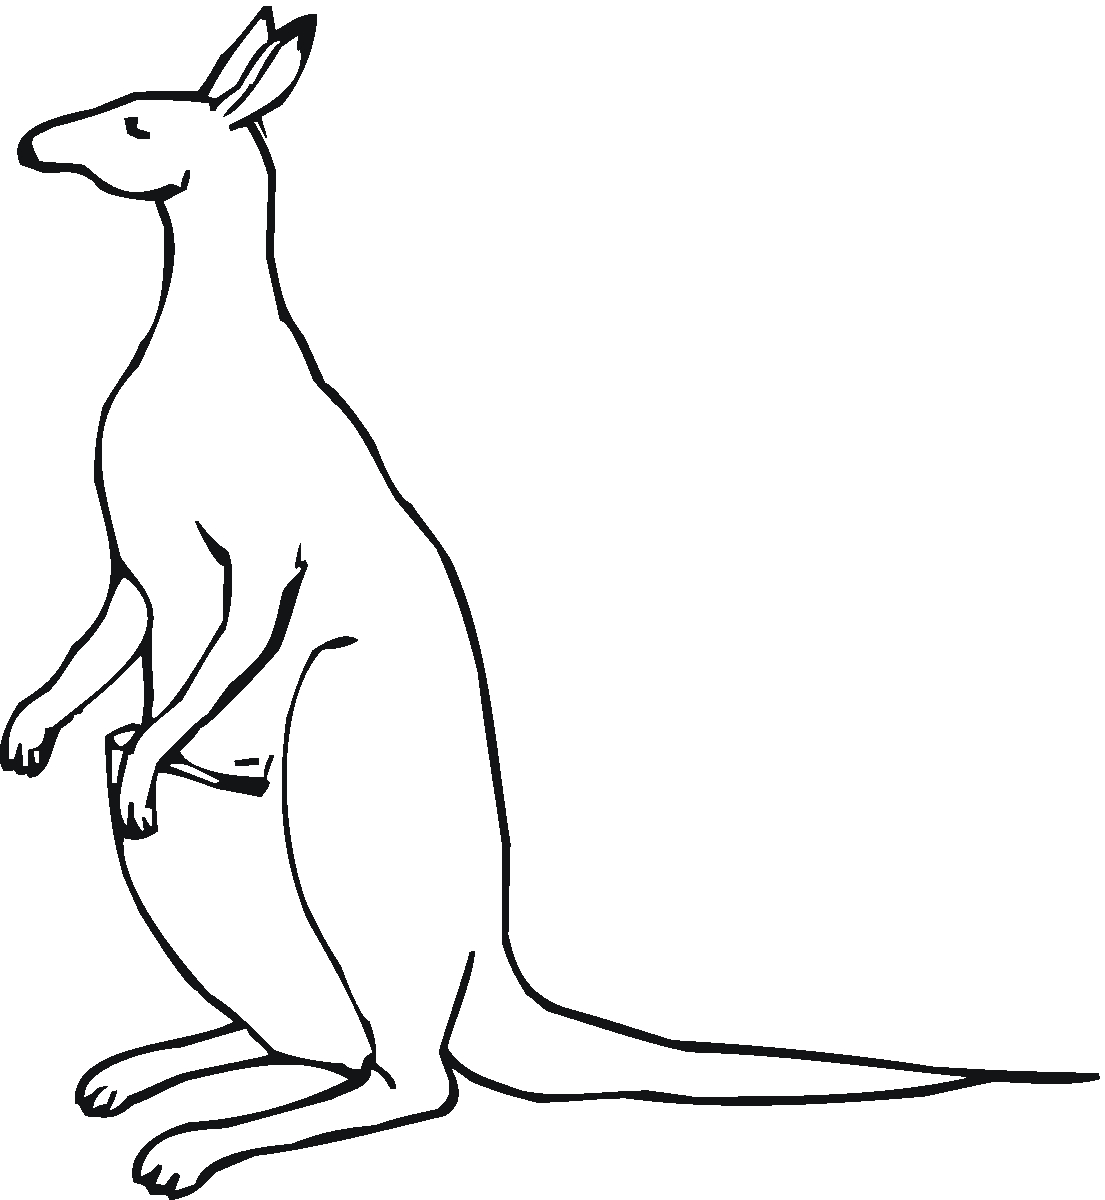 Kangaroo Color Page Free Kangaroo Images For Kids Download Free Clip Art Free Clip Art